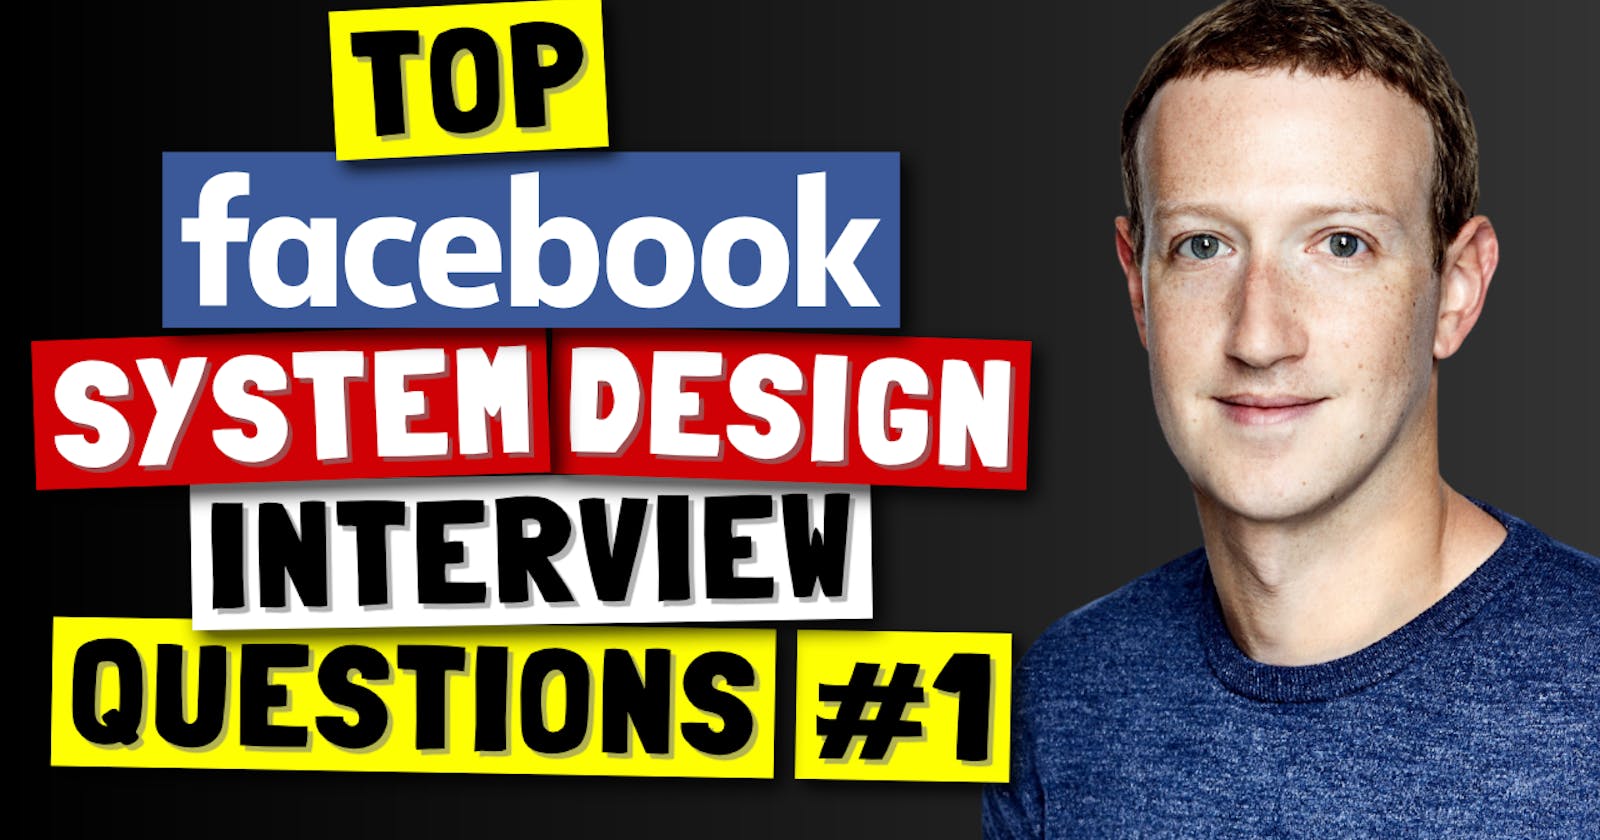 Top Facebook System Design Interview Questions (Part 1)